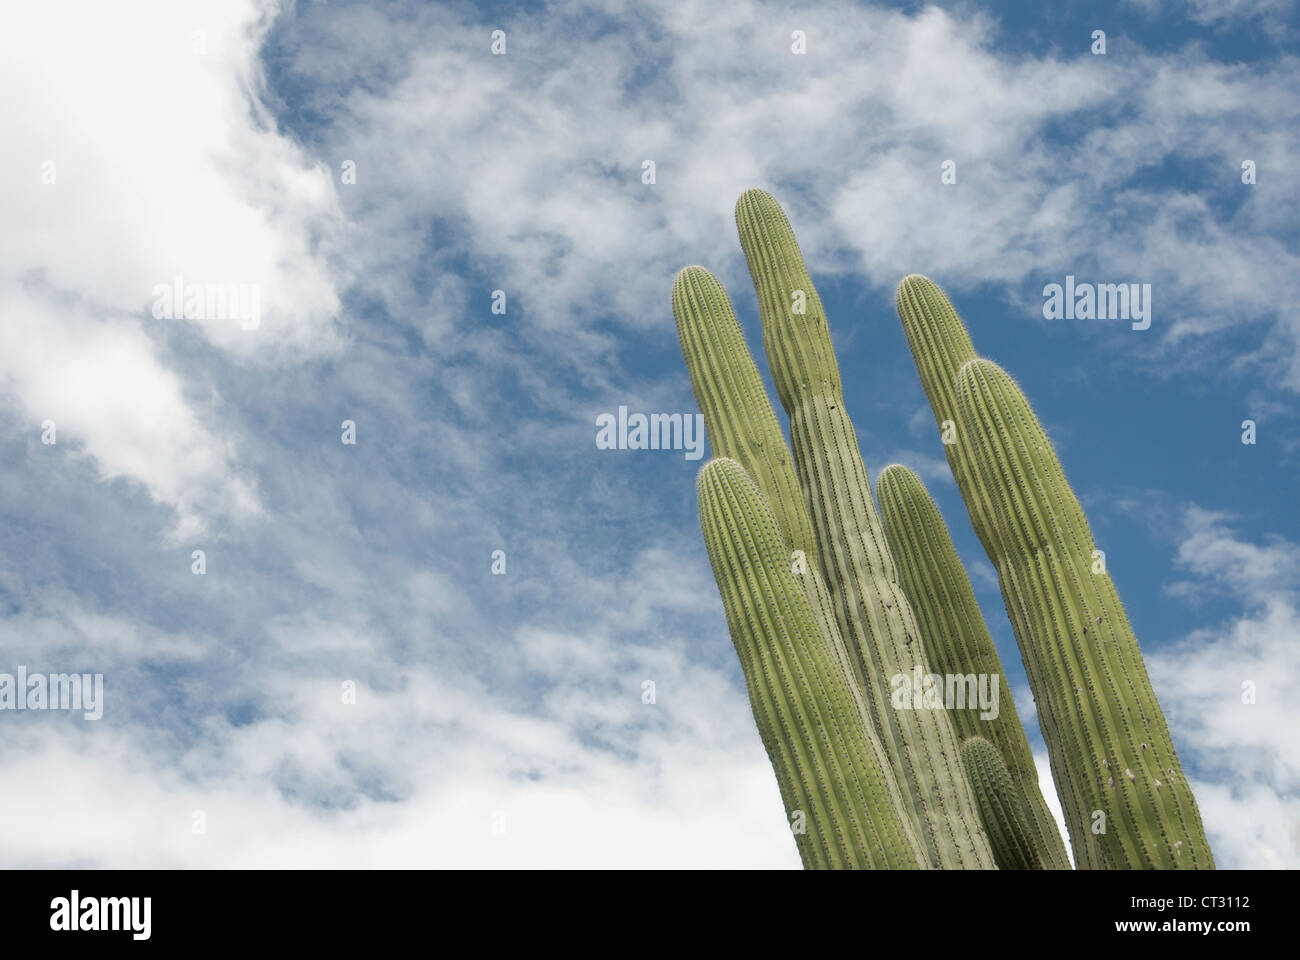 Saguaro cactus, Carnegiea gigantea, green spears of columnar succulent against a blue sky with clouds. Stock Photo